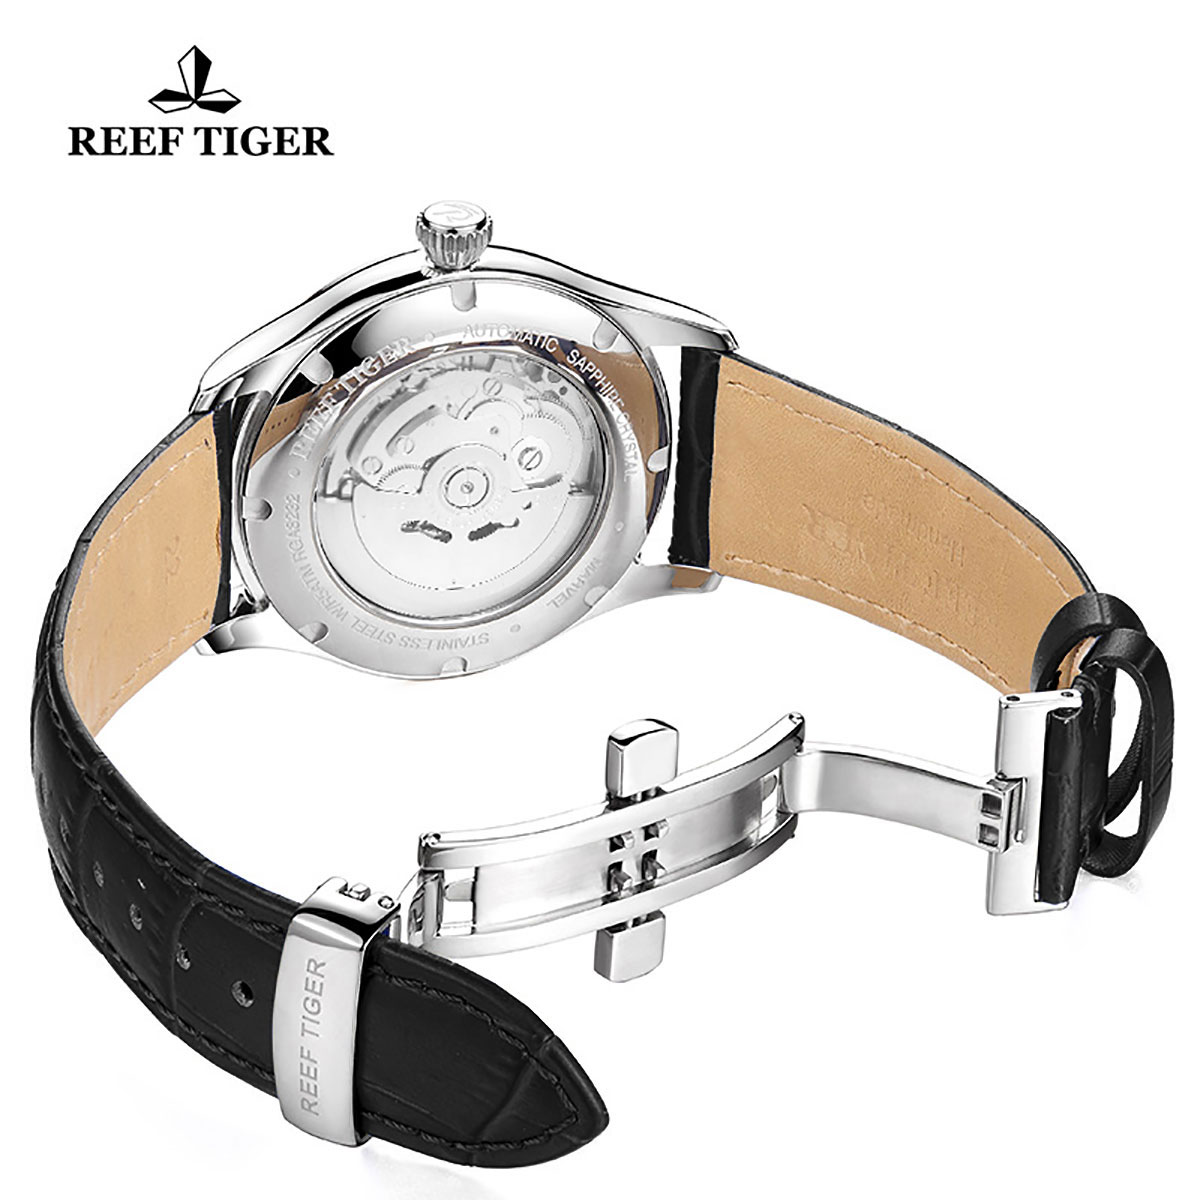 Reef Tiger Heritage Dress Automatic Watch Black Dial Calfskin Leather Strap RGA823G-YBB